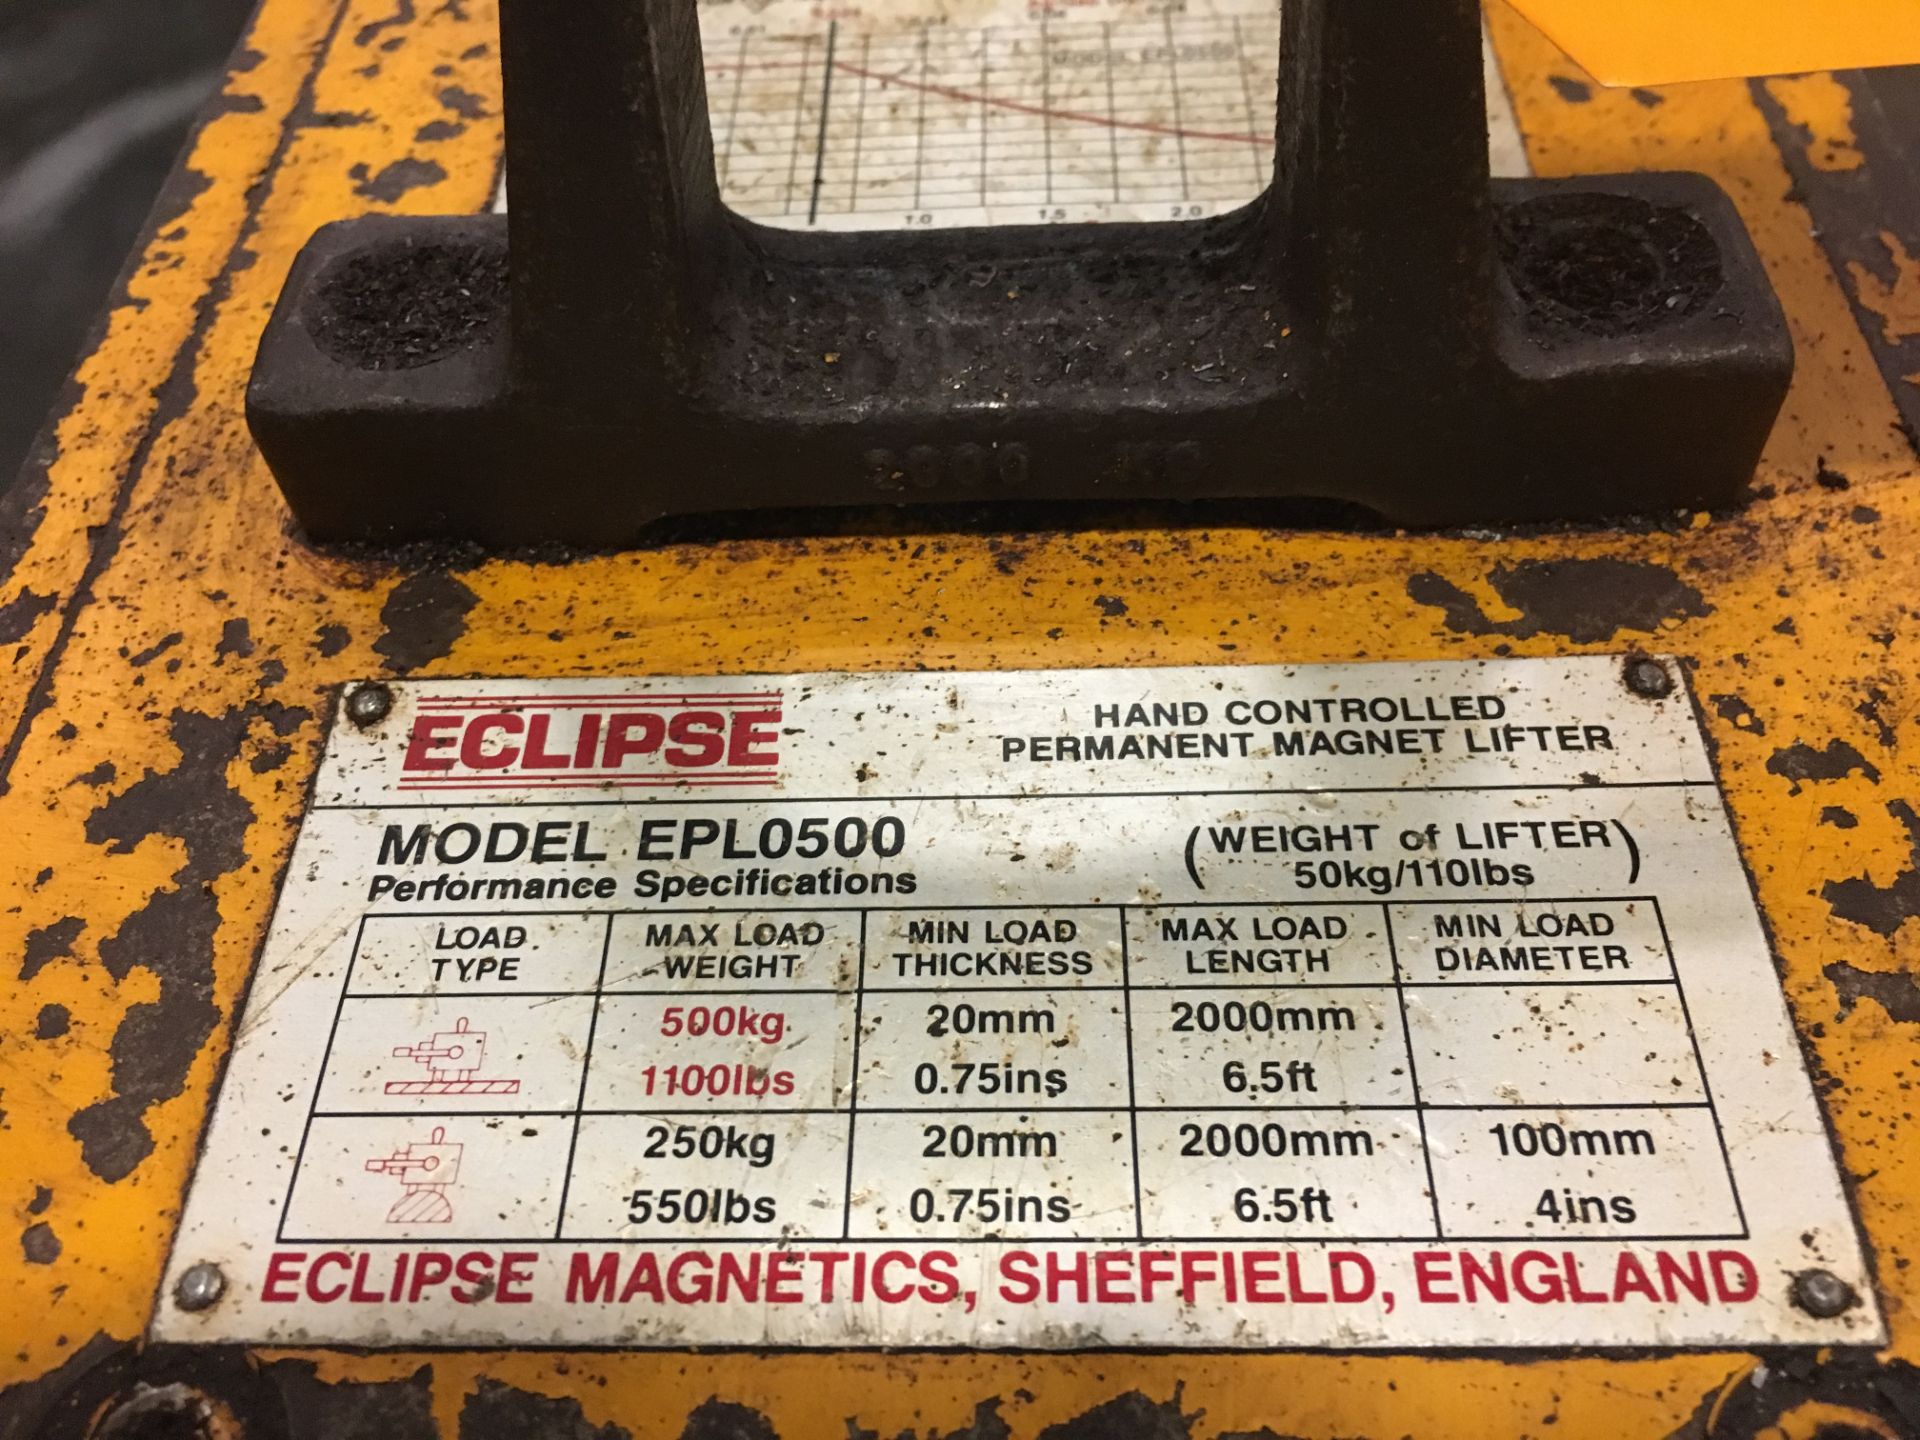 Eclipse Model EPL0500 Crane Mount Magnet with Maximum Lifting Capacity 1,100lb - Image 2 of 2